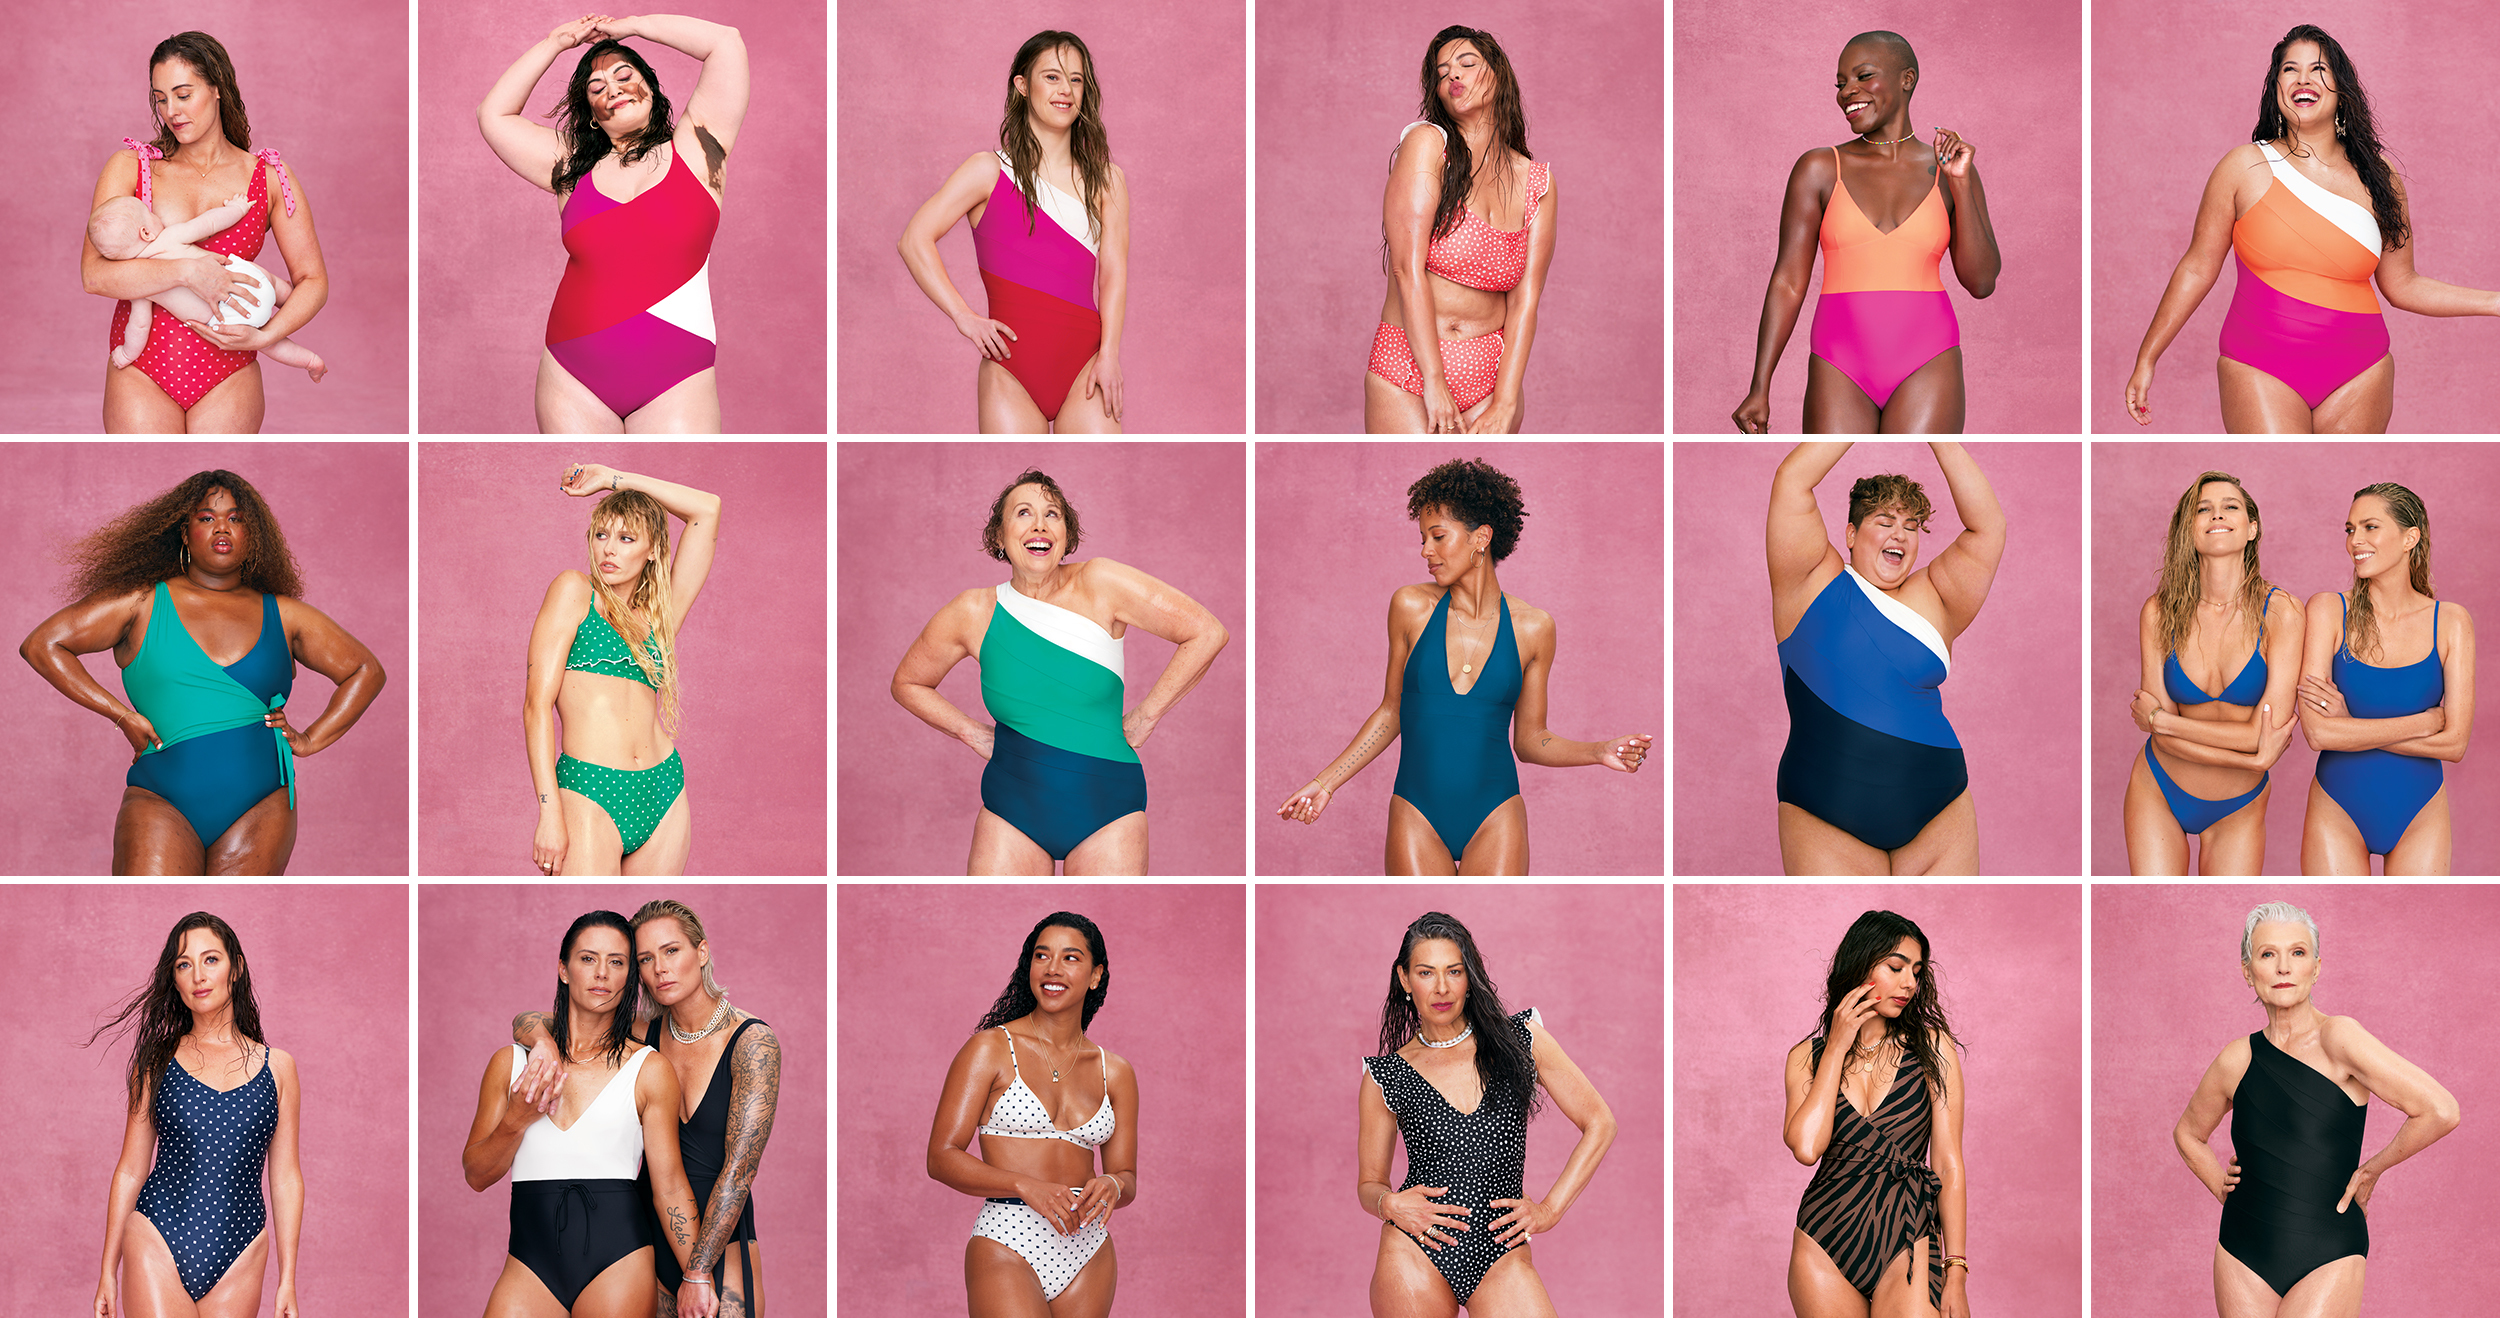 Summersalt Wants to Rewrite Swimwear Marketing for Women